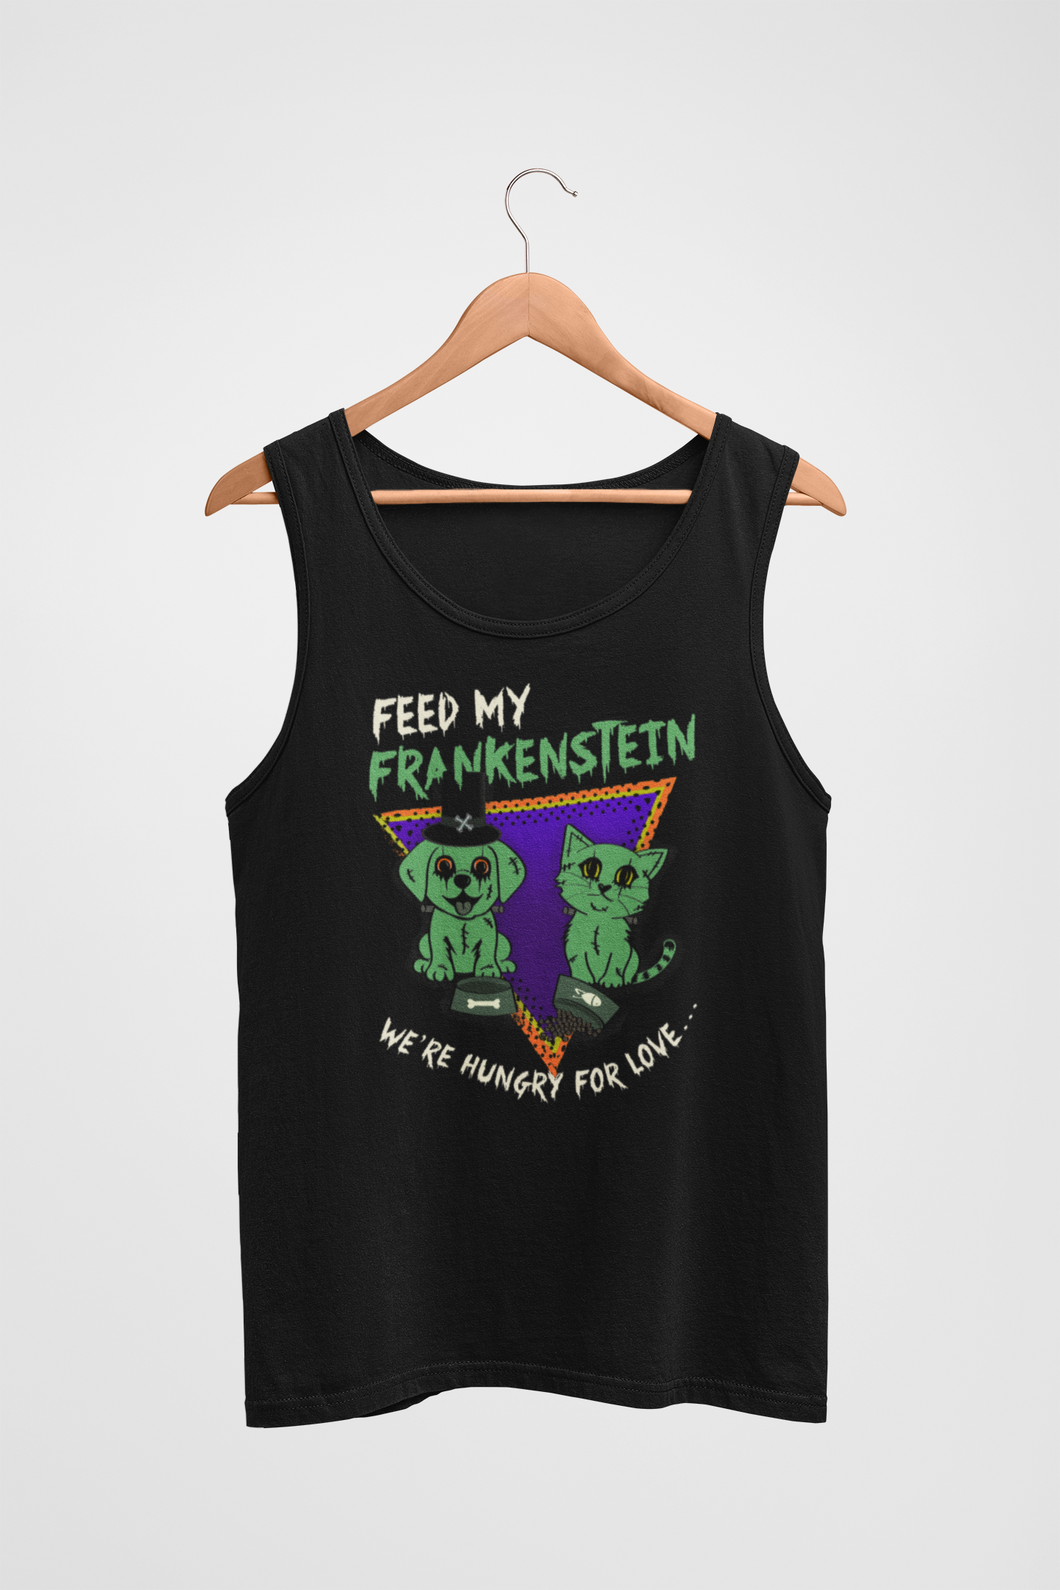 Feed My Frankenstein Men's/Unisex or Women's Tank